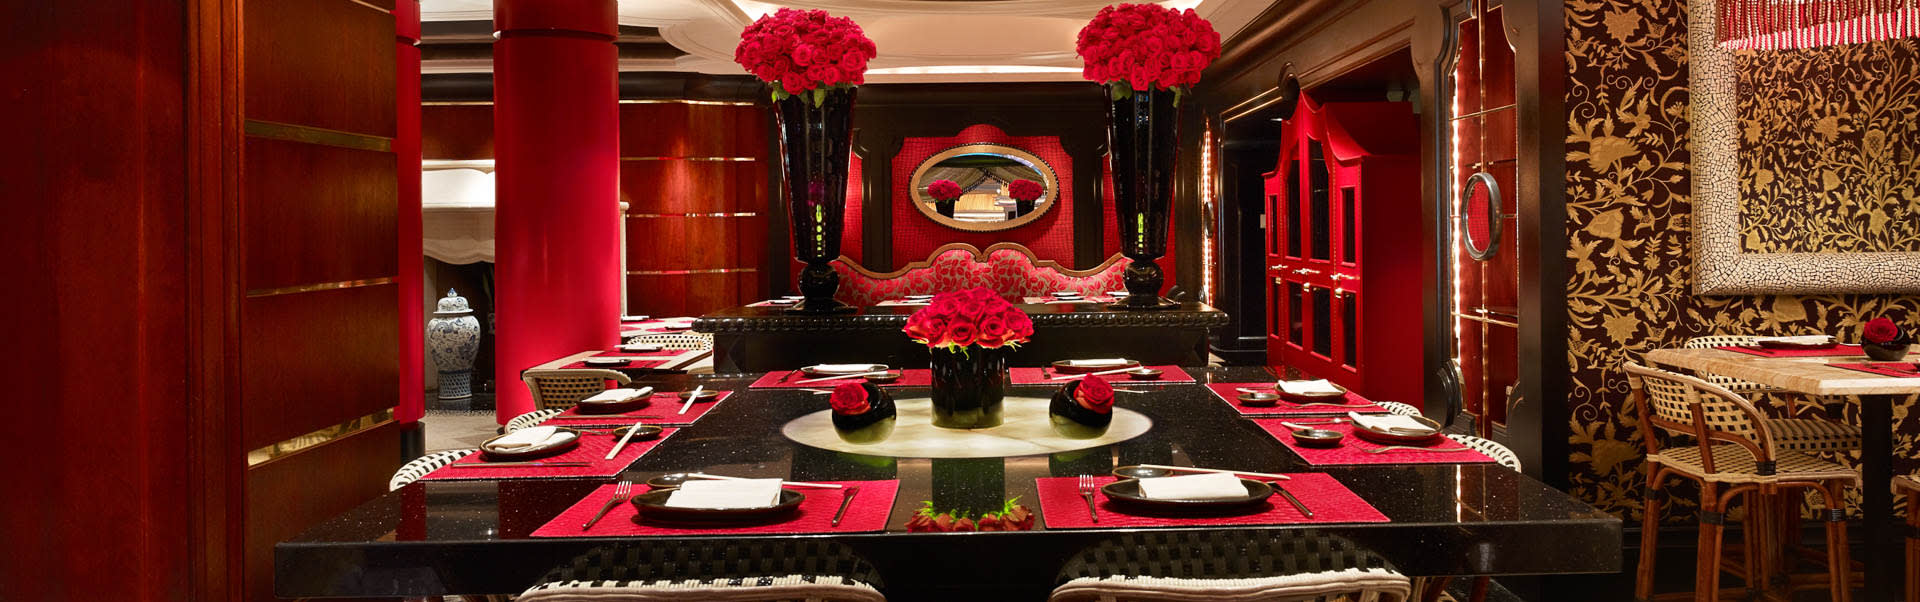 Red 8 Asian Restaurant | Wynn Las Vegas and Encore Resort